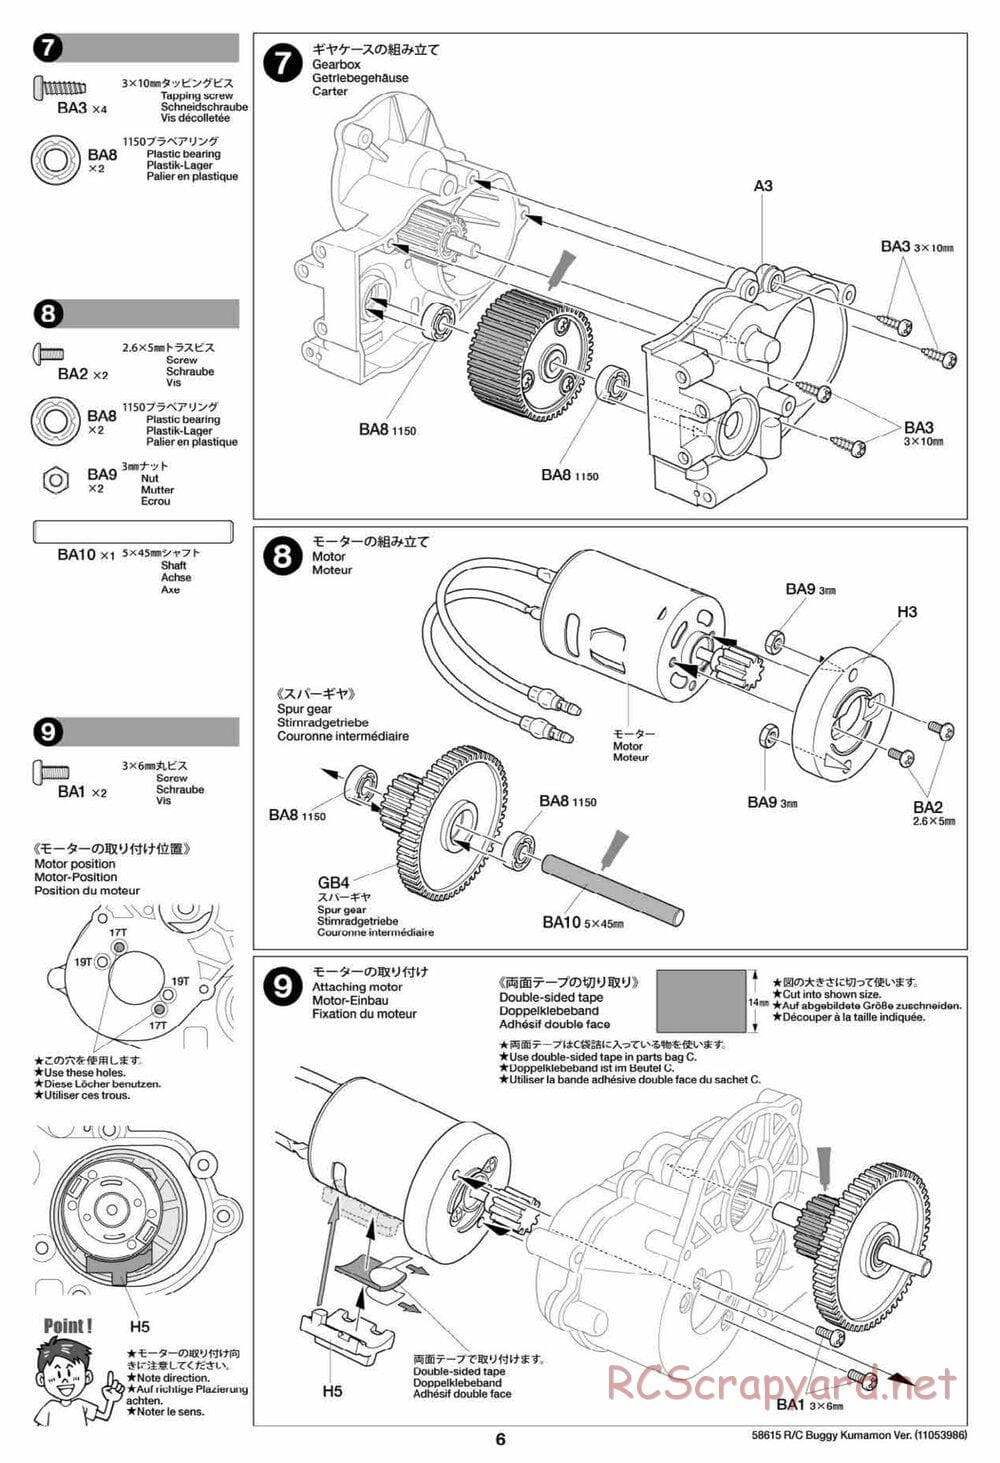 Tamiya - Buggy Kumamon Version Chassis - Manual - Page 6